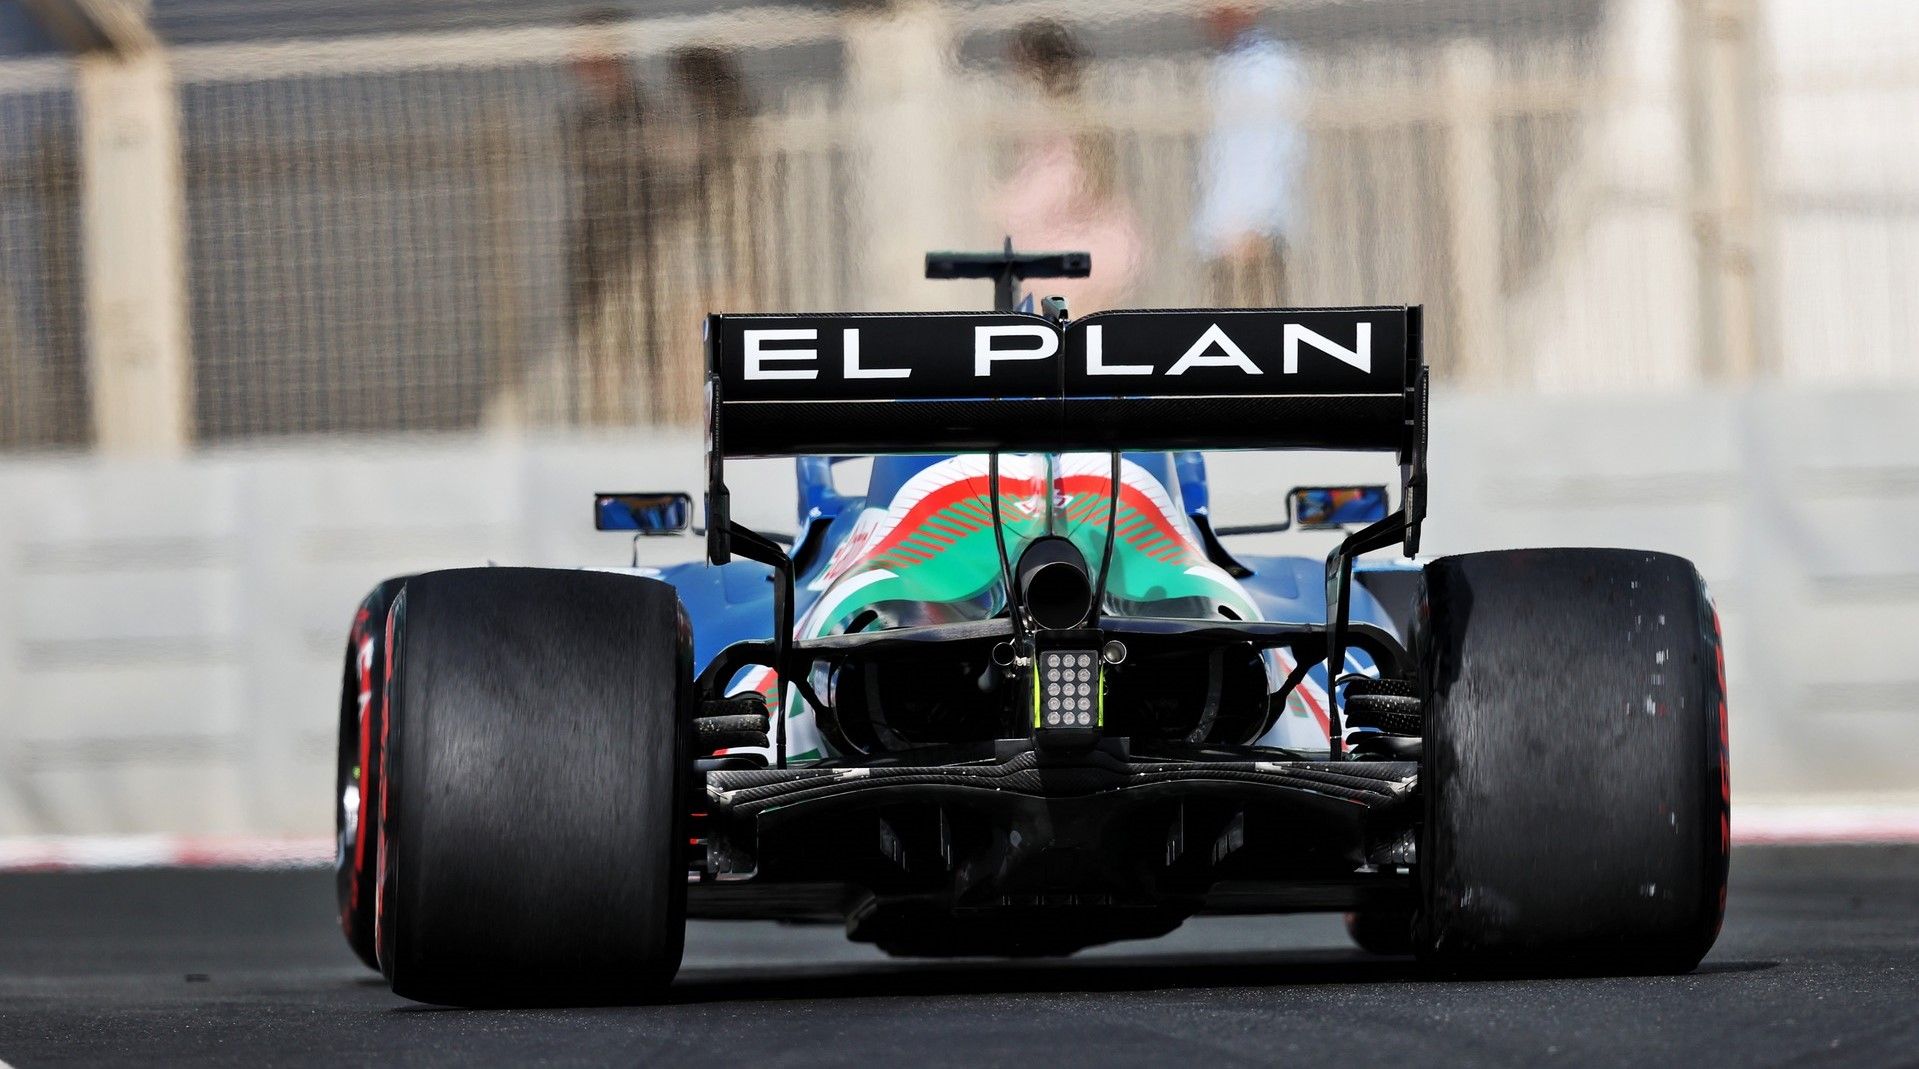 Alonso Abu Dhabi 2021 "El Plan" Rear Wing